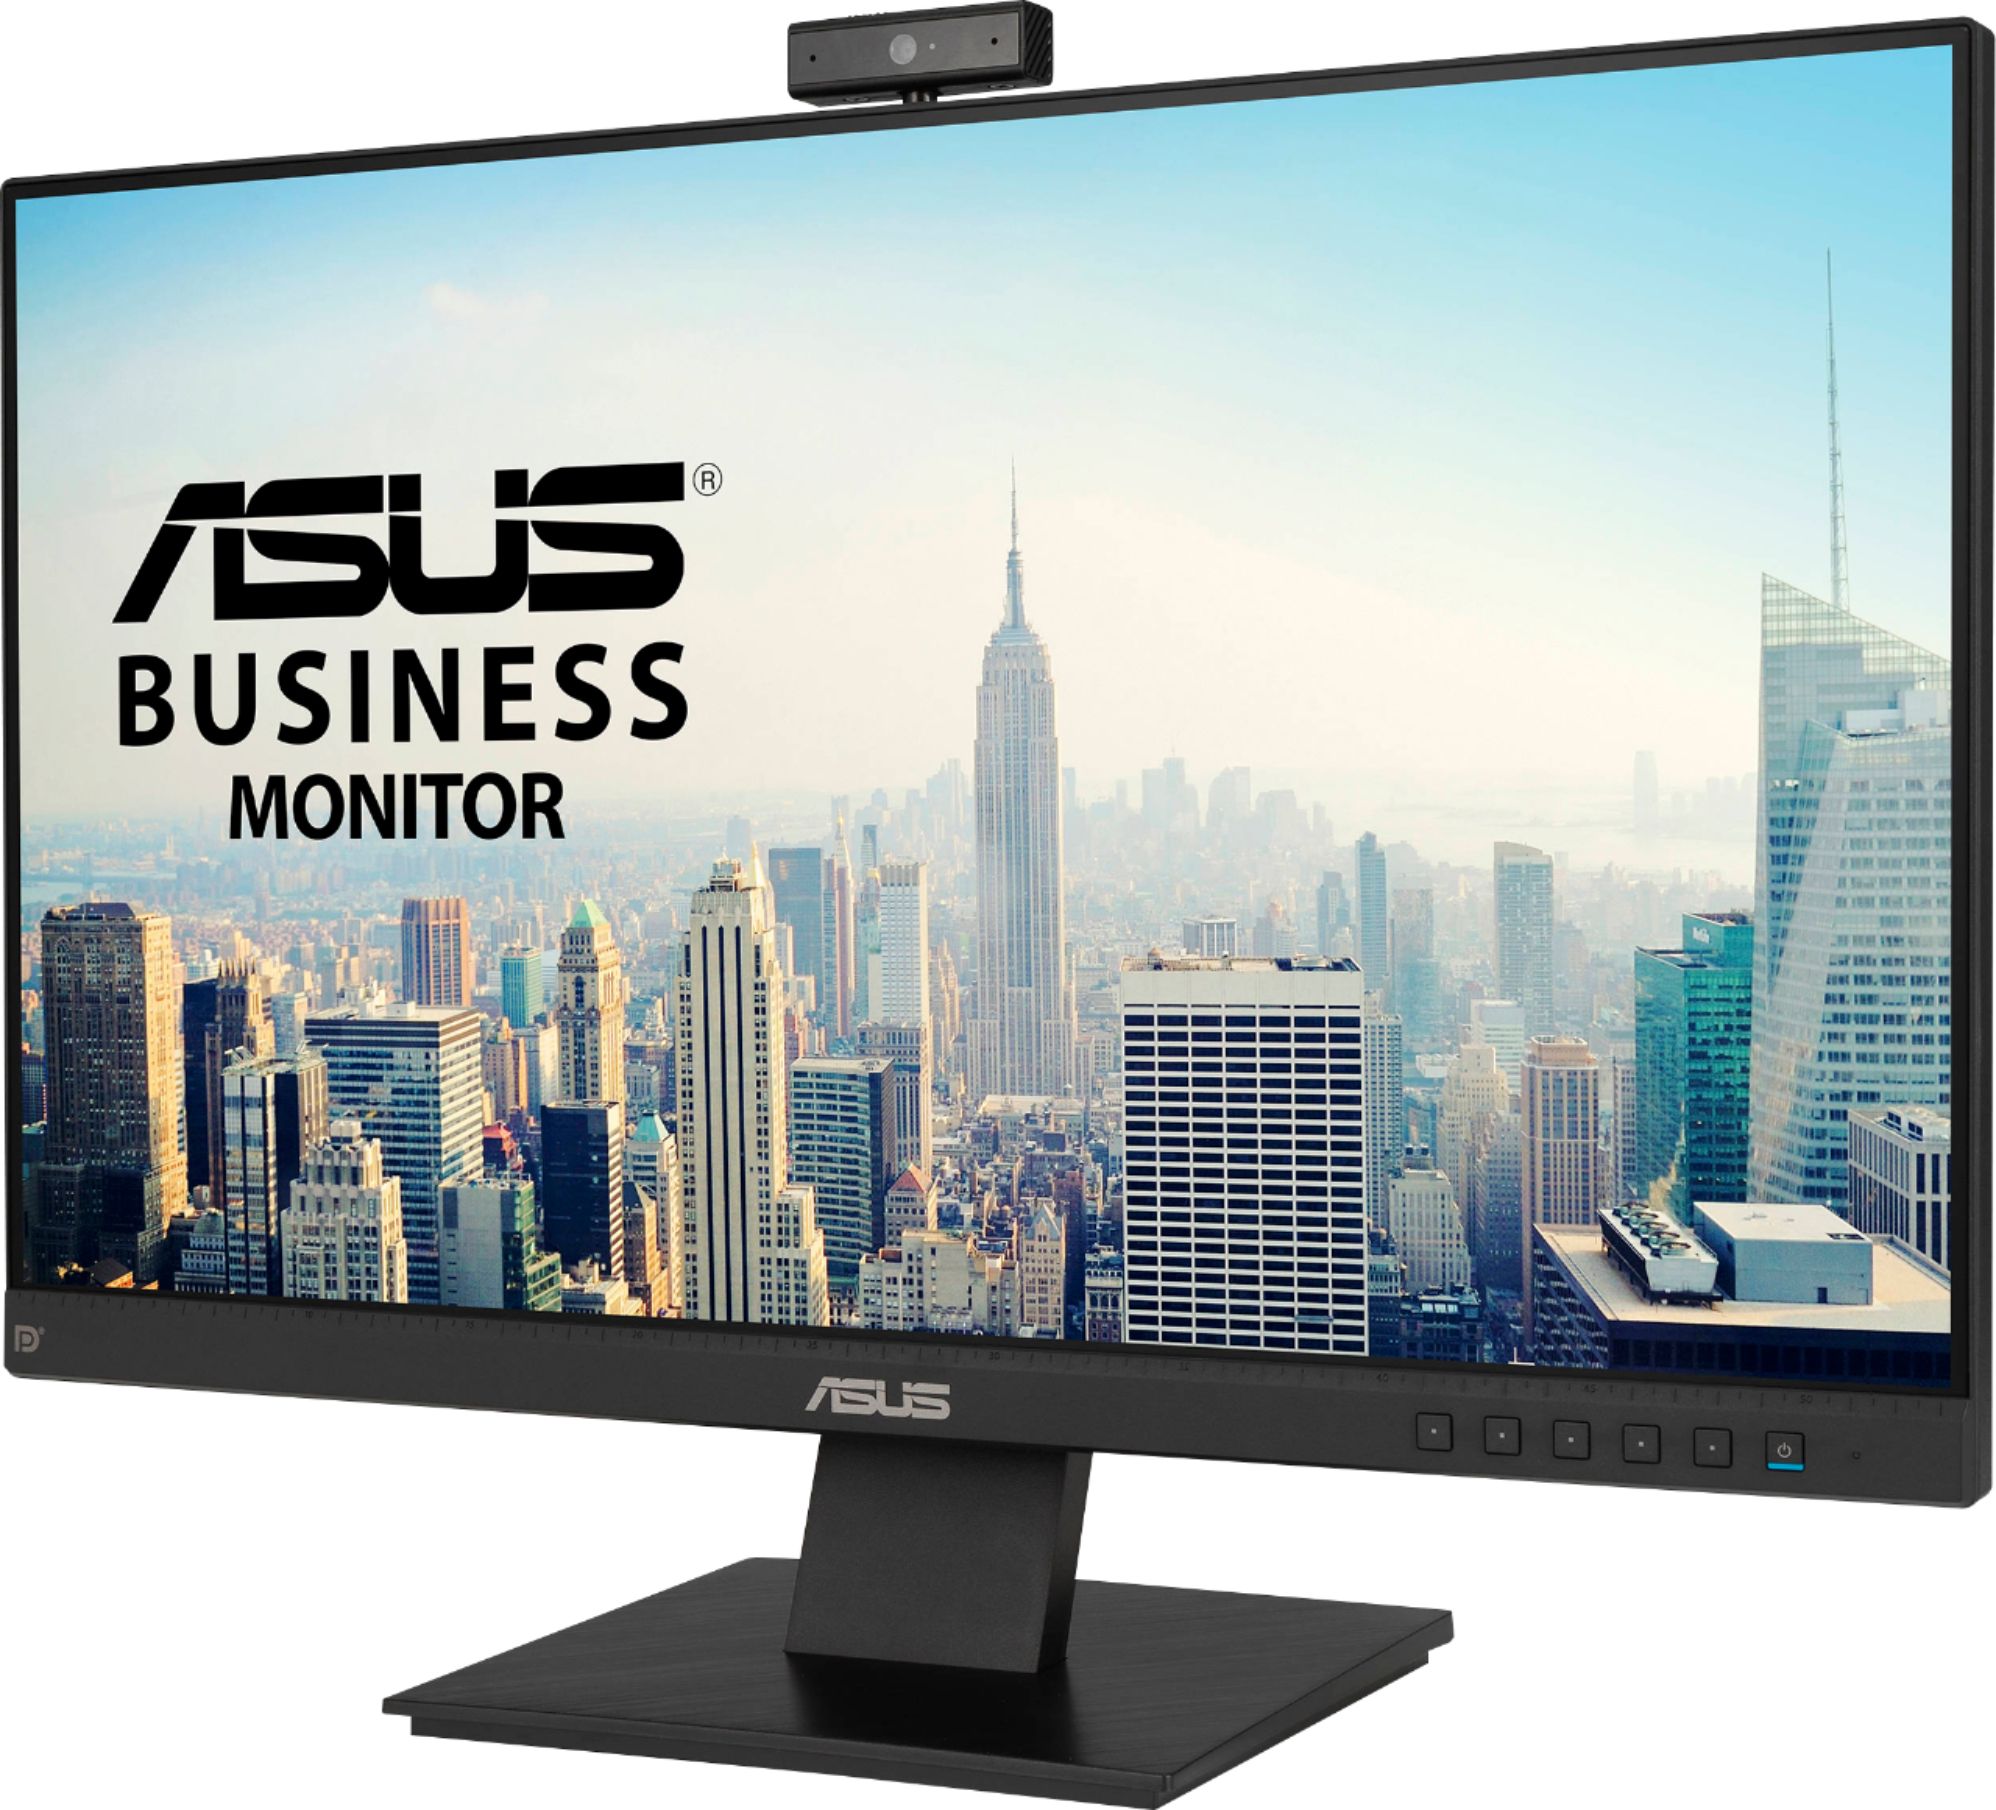 Angle View: Dell - 24" LCD Widescreen Monitor (HDMI, VGA, DisplayPort, USB Hub) - Black